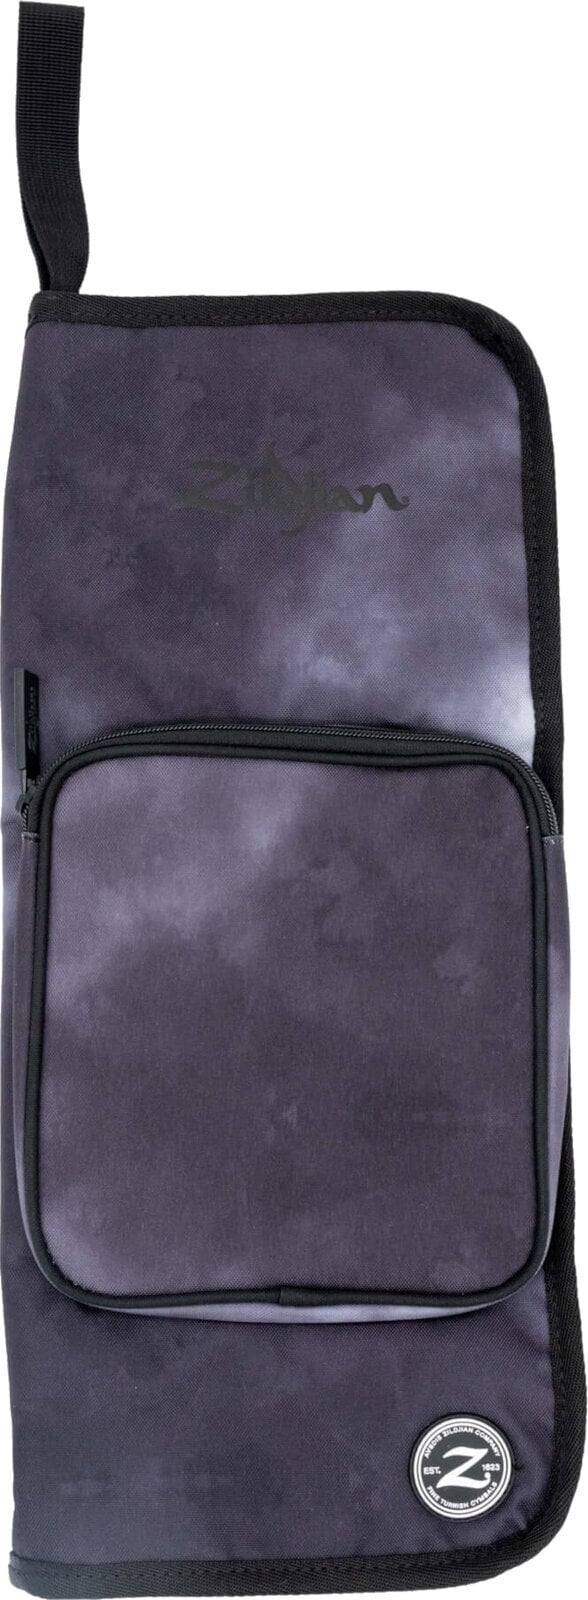 Borsa Bacchette Zildjian Student Stick Bag Black Rain Cloud Borsa Bacchette